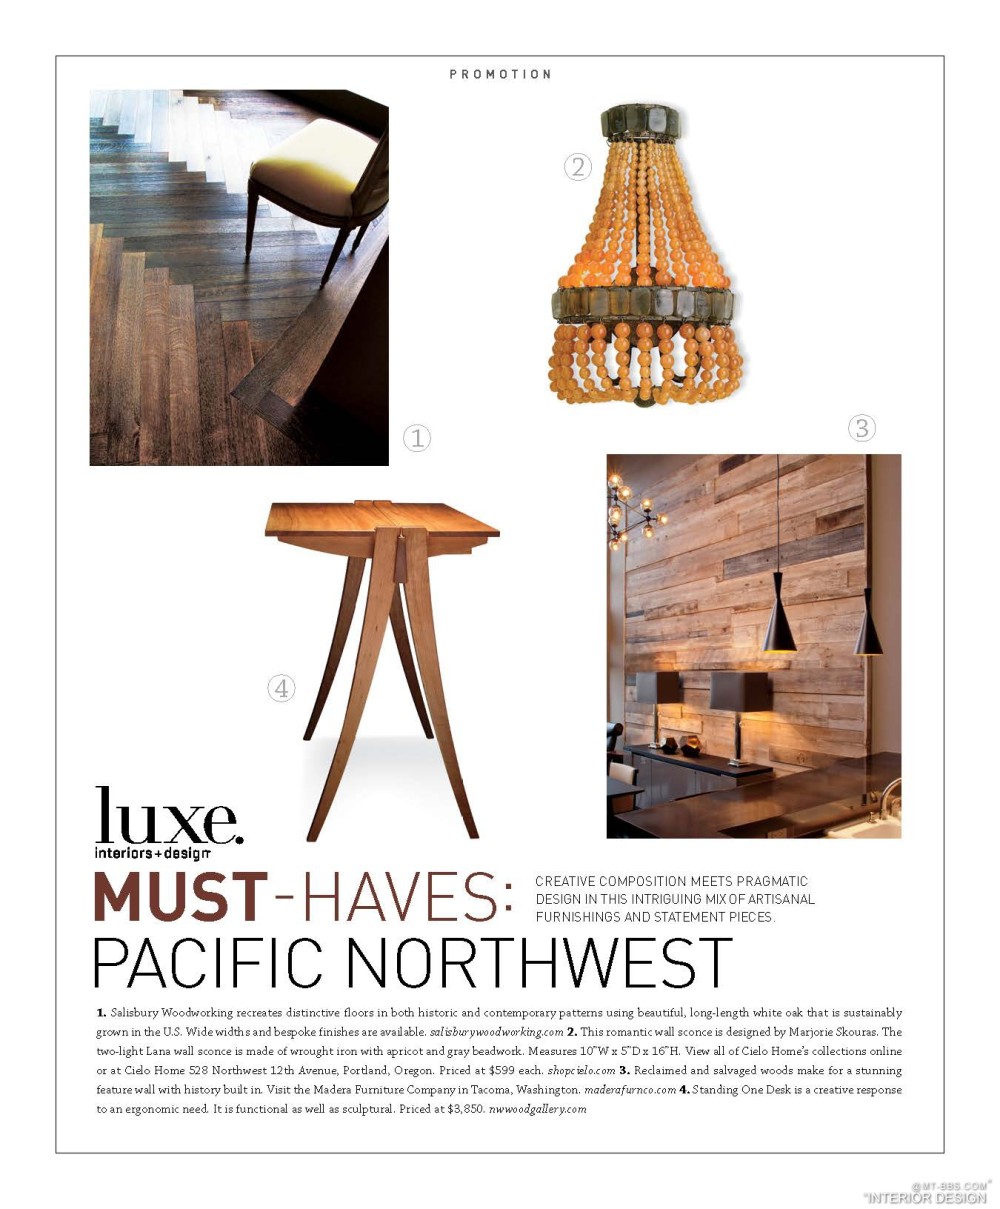 Luxe Interiors Design-pacific northwest2013春季号_页面_080.jpg